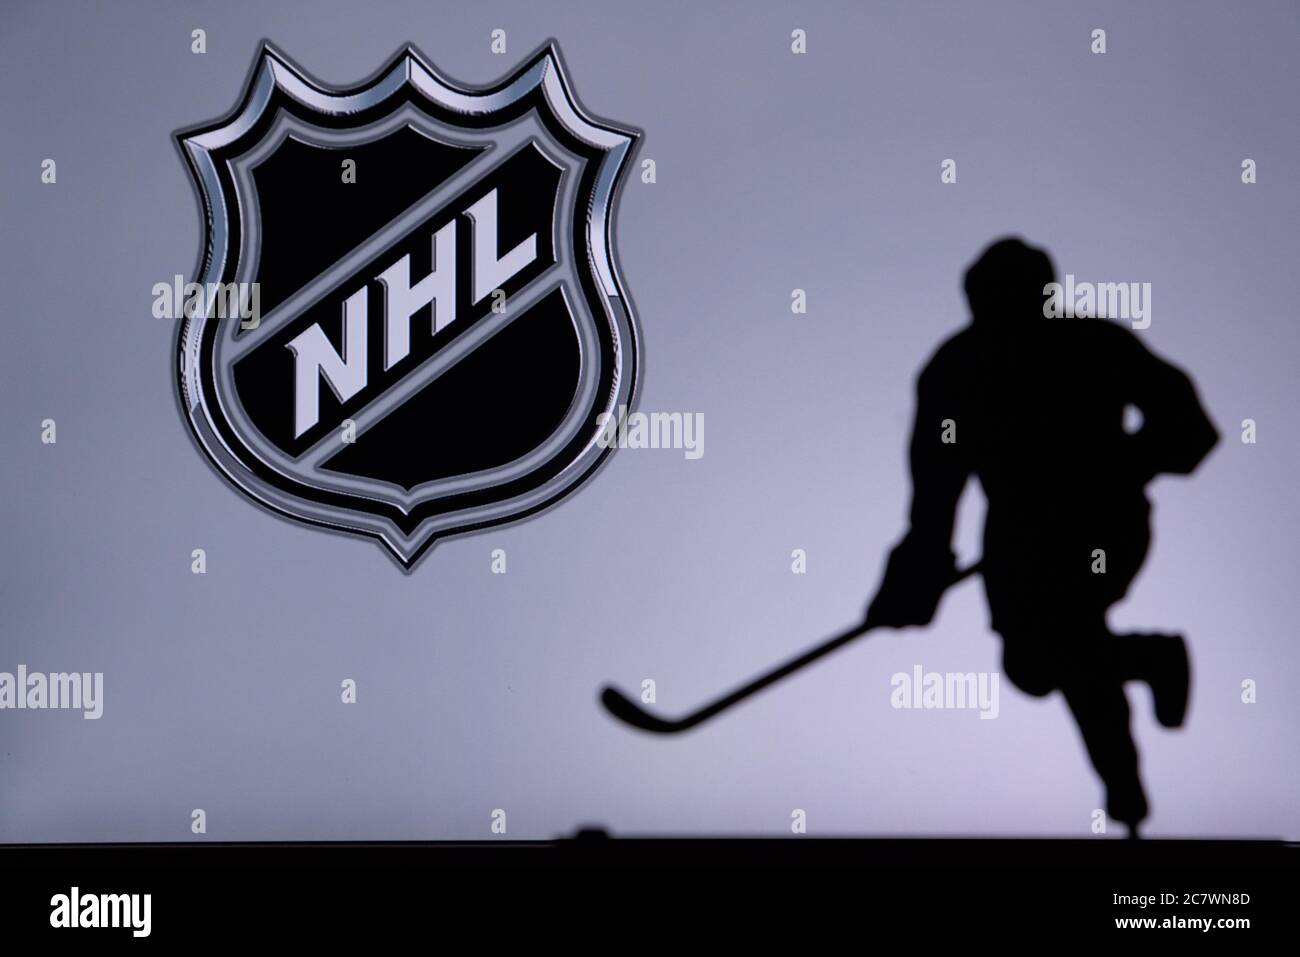 TORONTO, KANADA, 17. JULI: National Hockey League Konzept Foto. Silhouette des professionellen NHL-Eishockey-Spieler Stockfoto